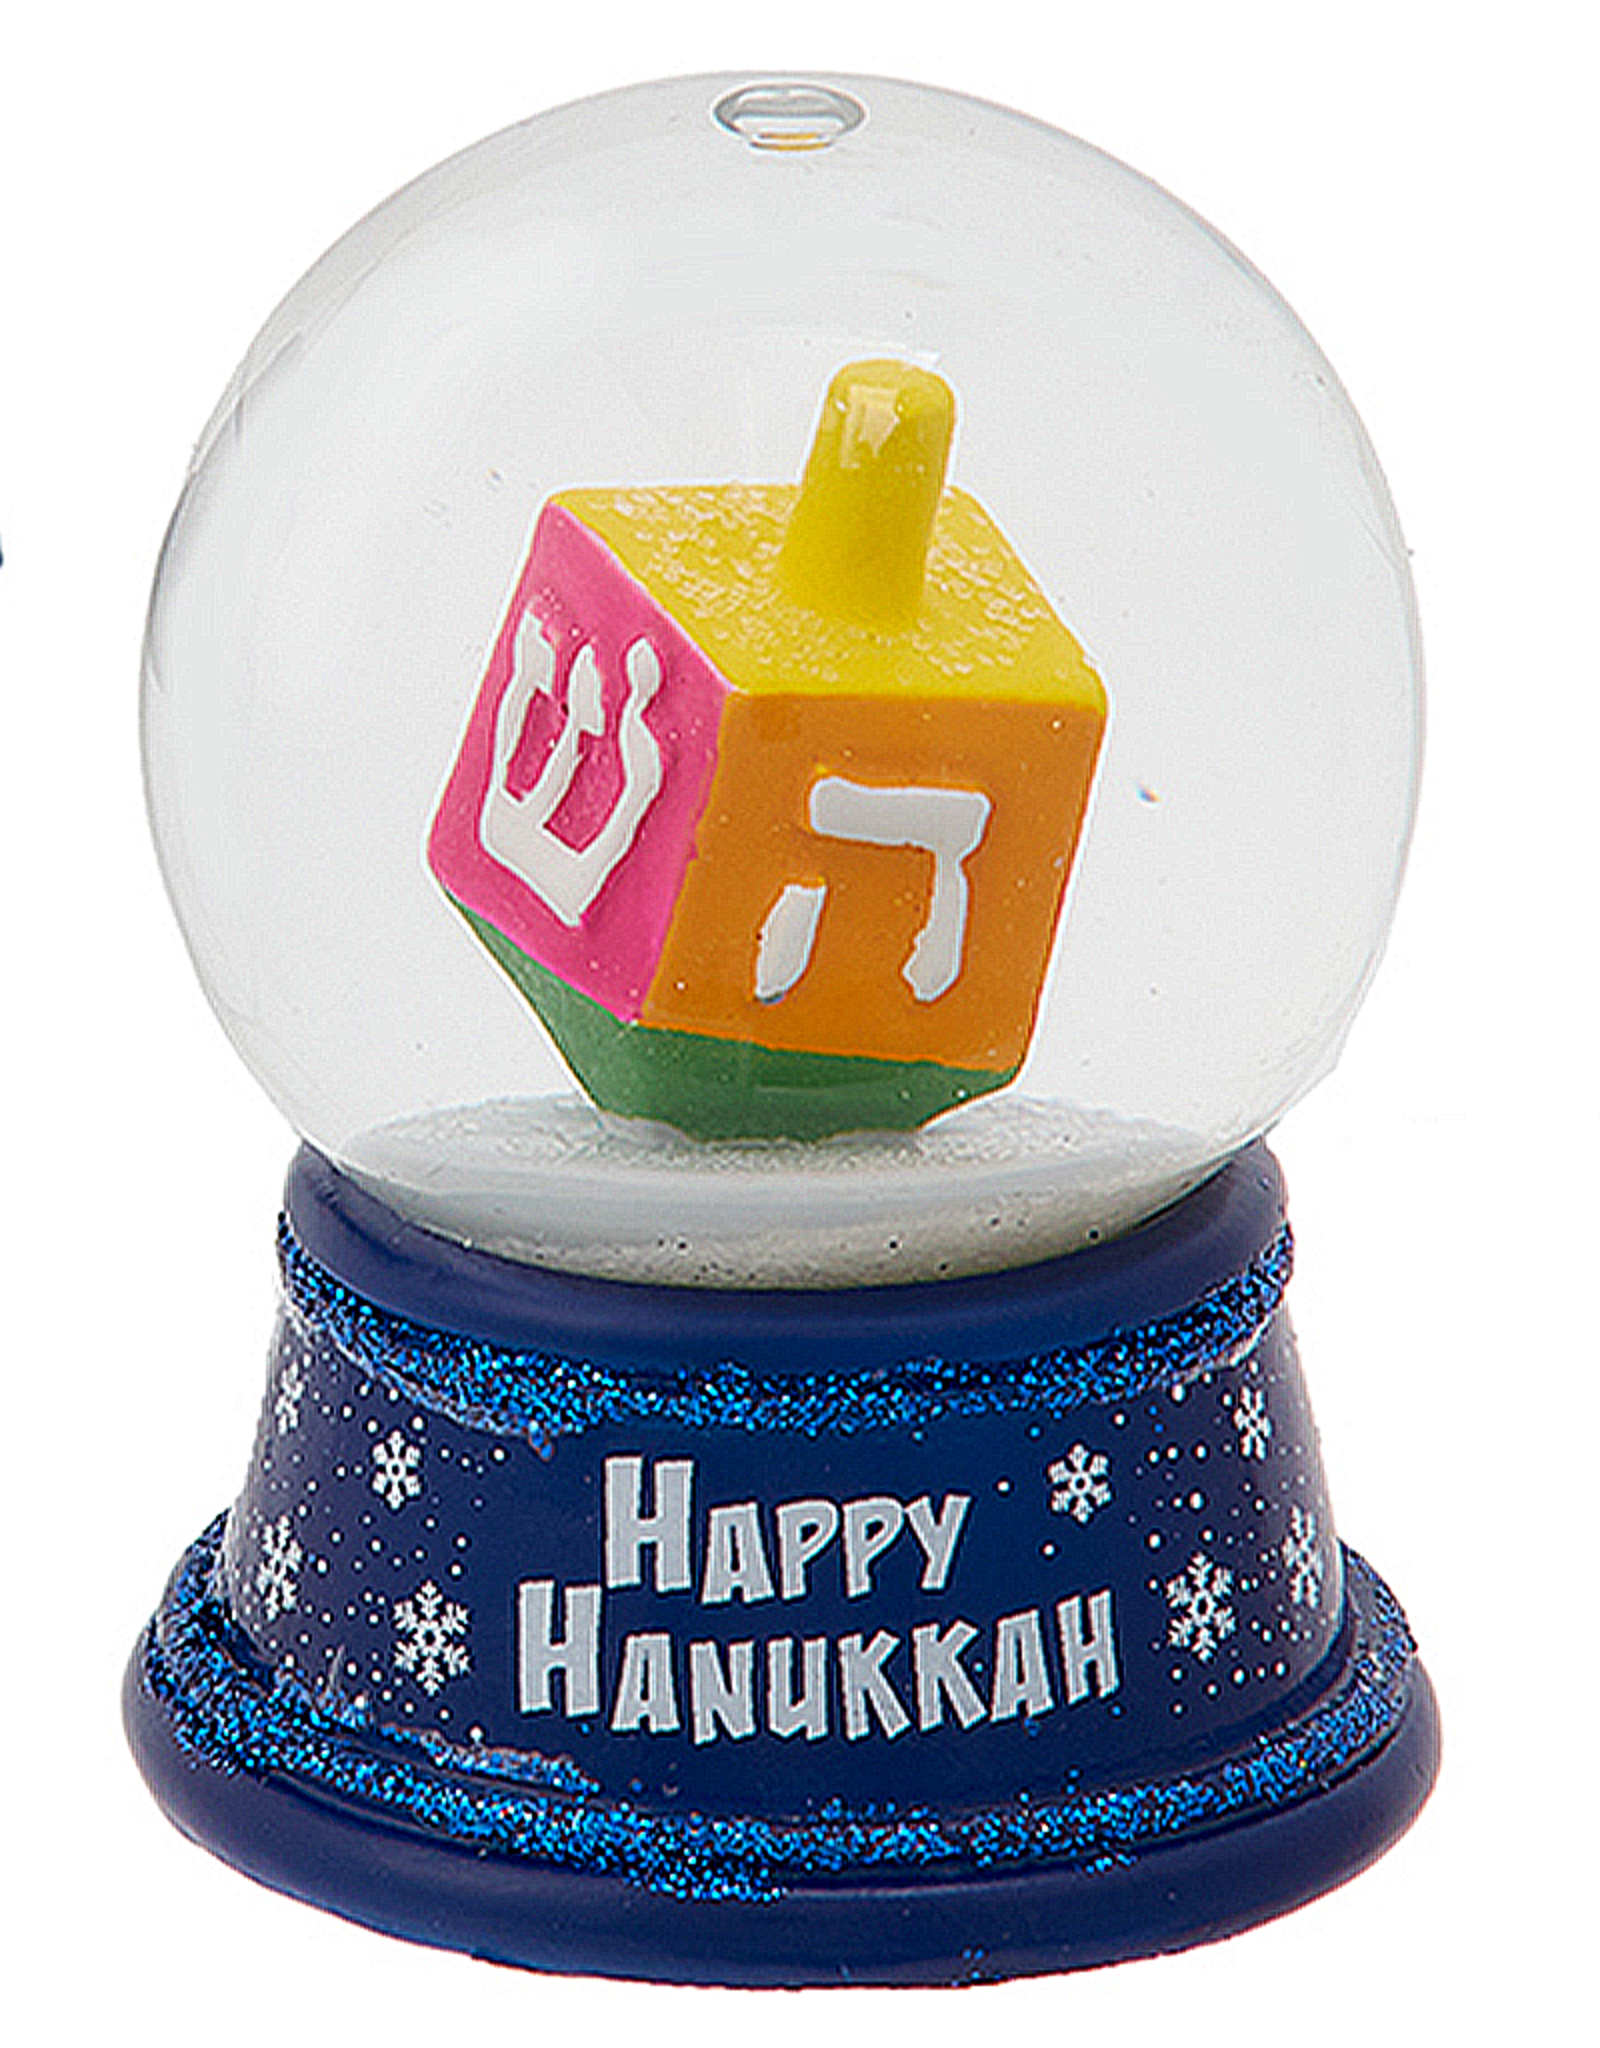 Kurt Adler Happy Hanukkah Snow Globe 45mm Dreidel Water Globe